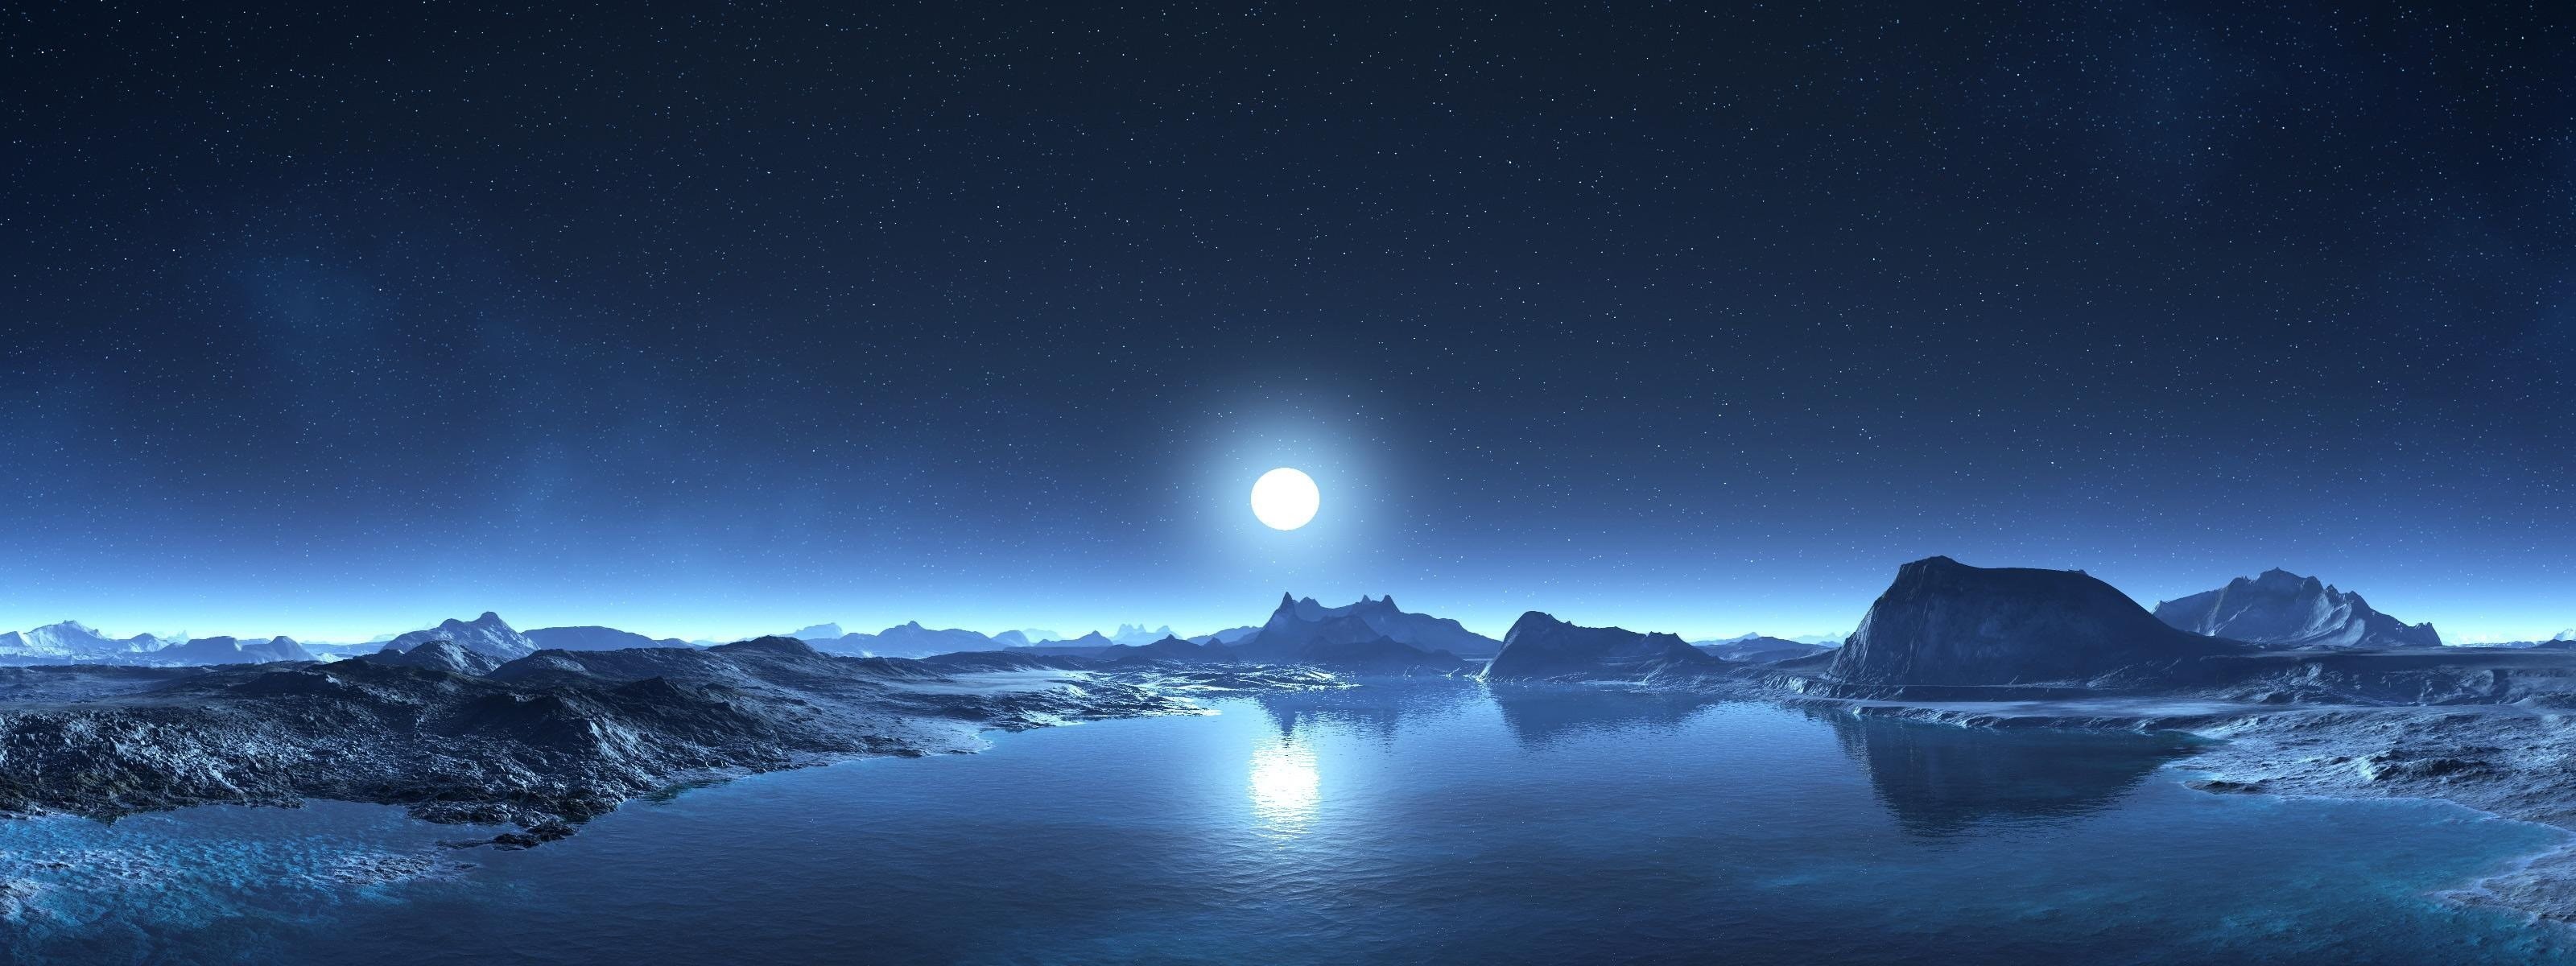 3200x1200 moon mountain water sky star beach